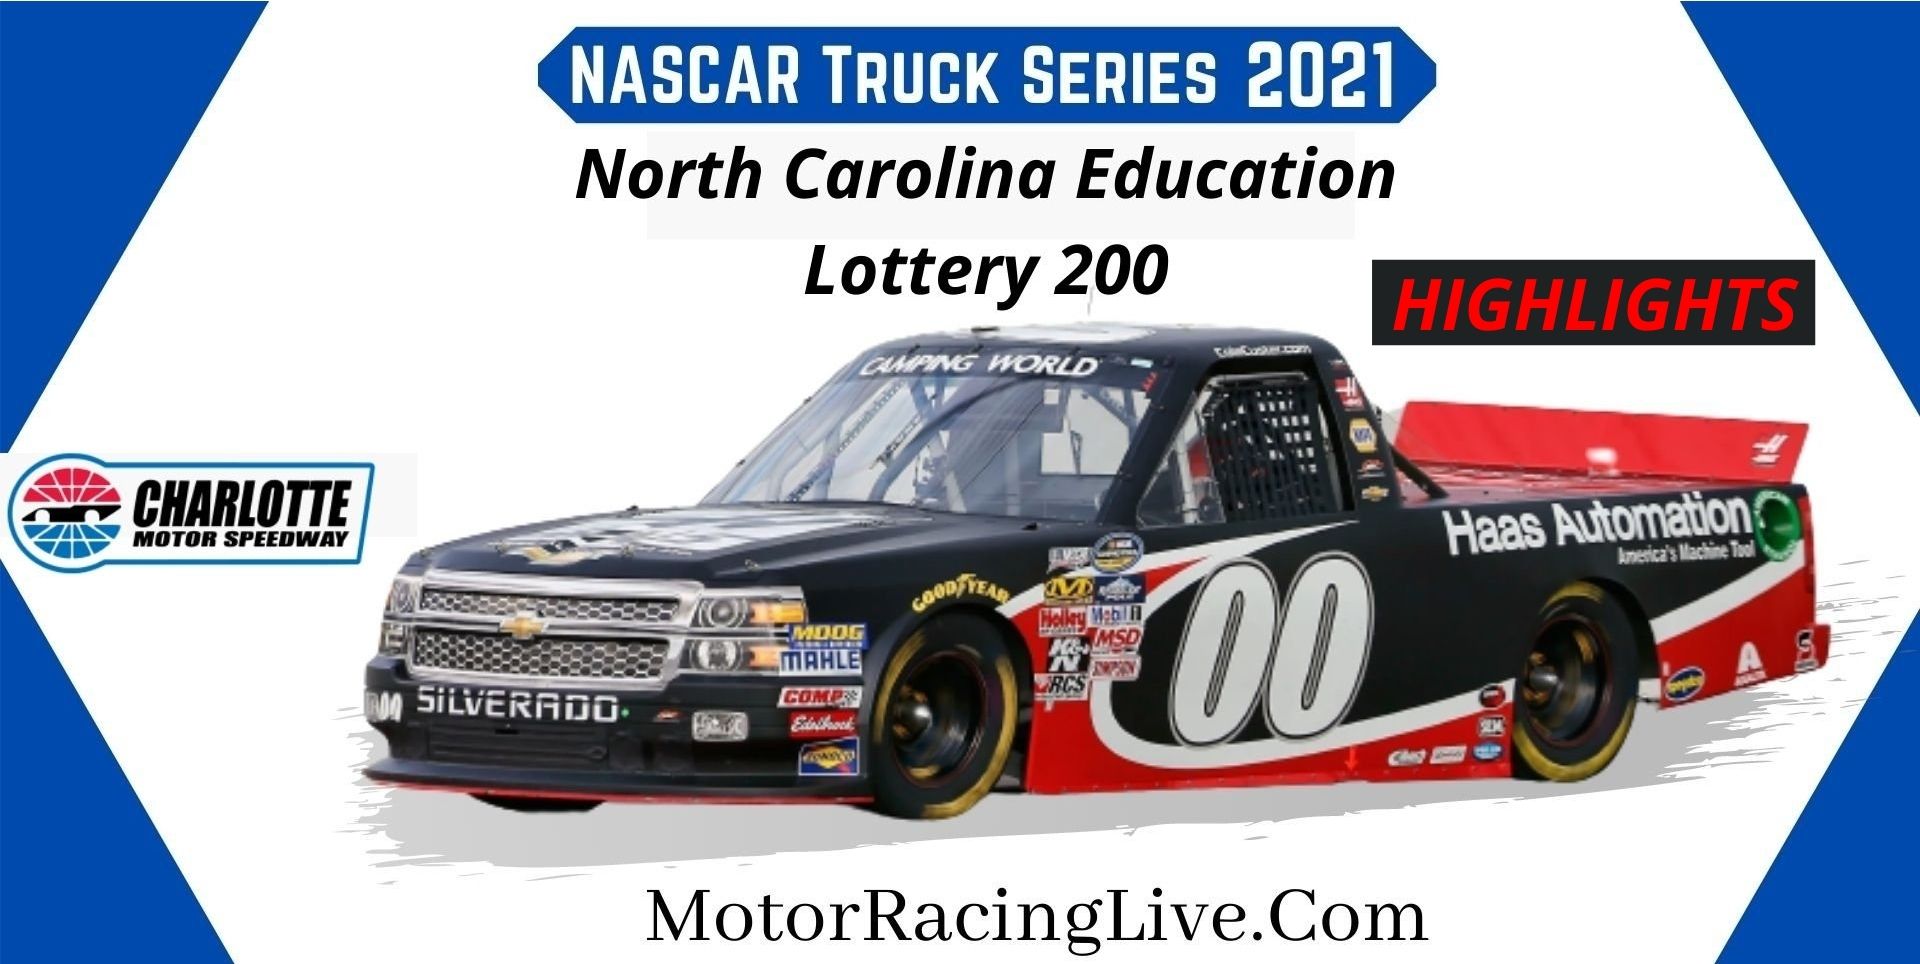 North Carolina Education Lottery 200 Highlights 2021 NASCAR